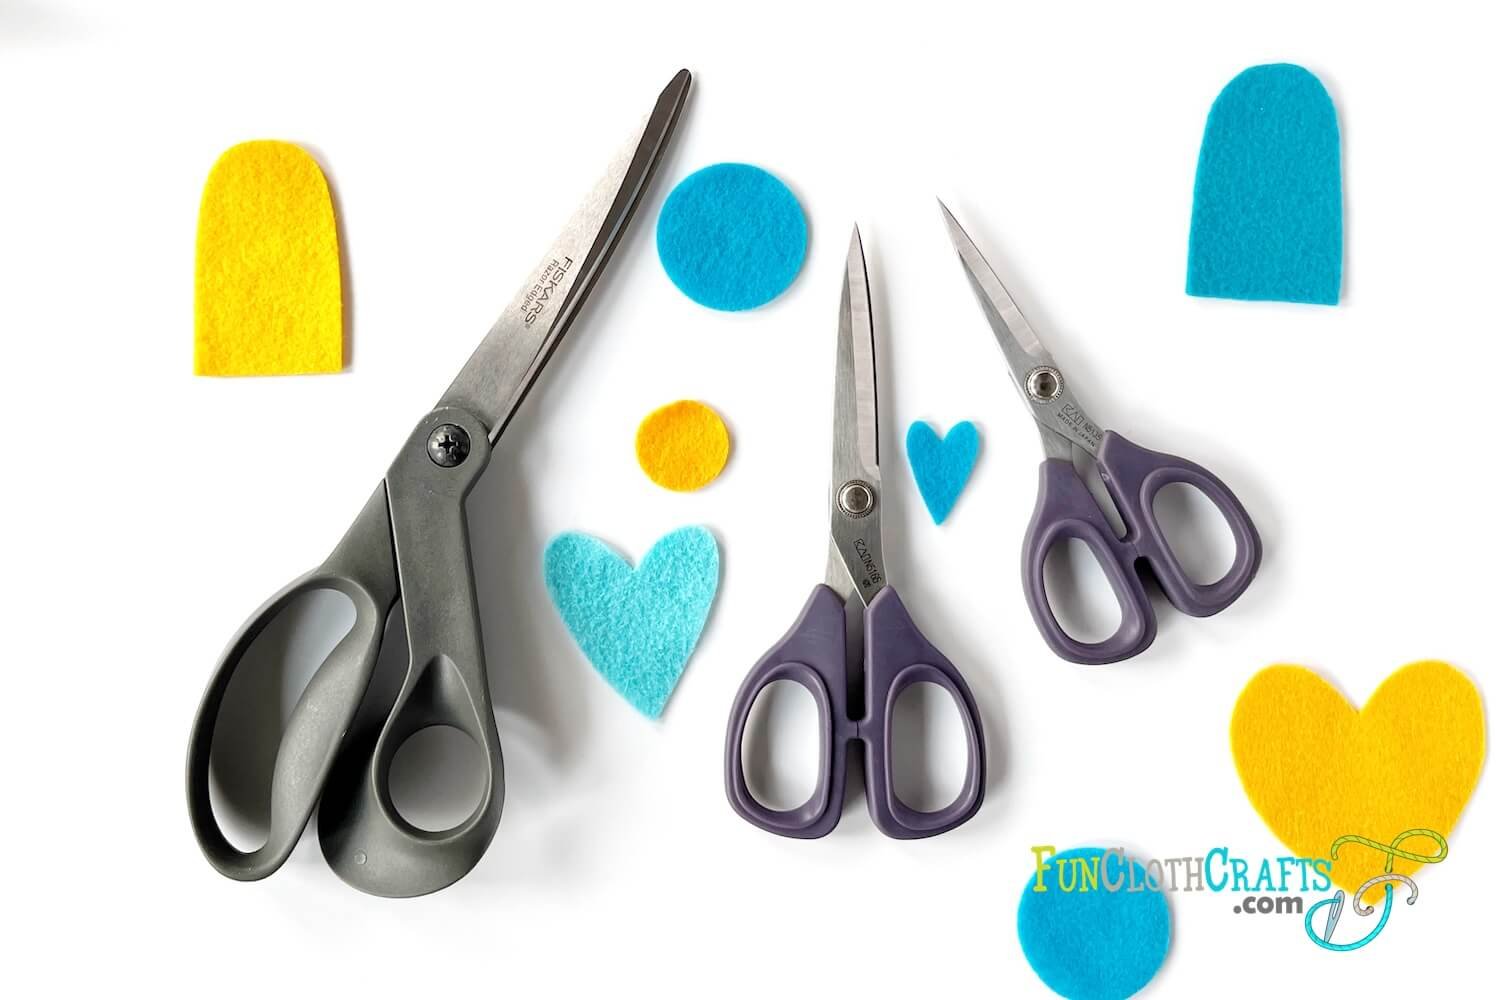 Felt Cutting Made Easy: The Best Scissors to Cut Felt